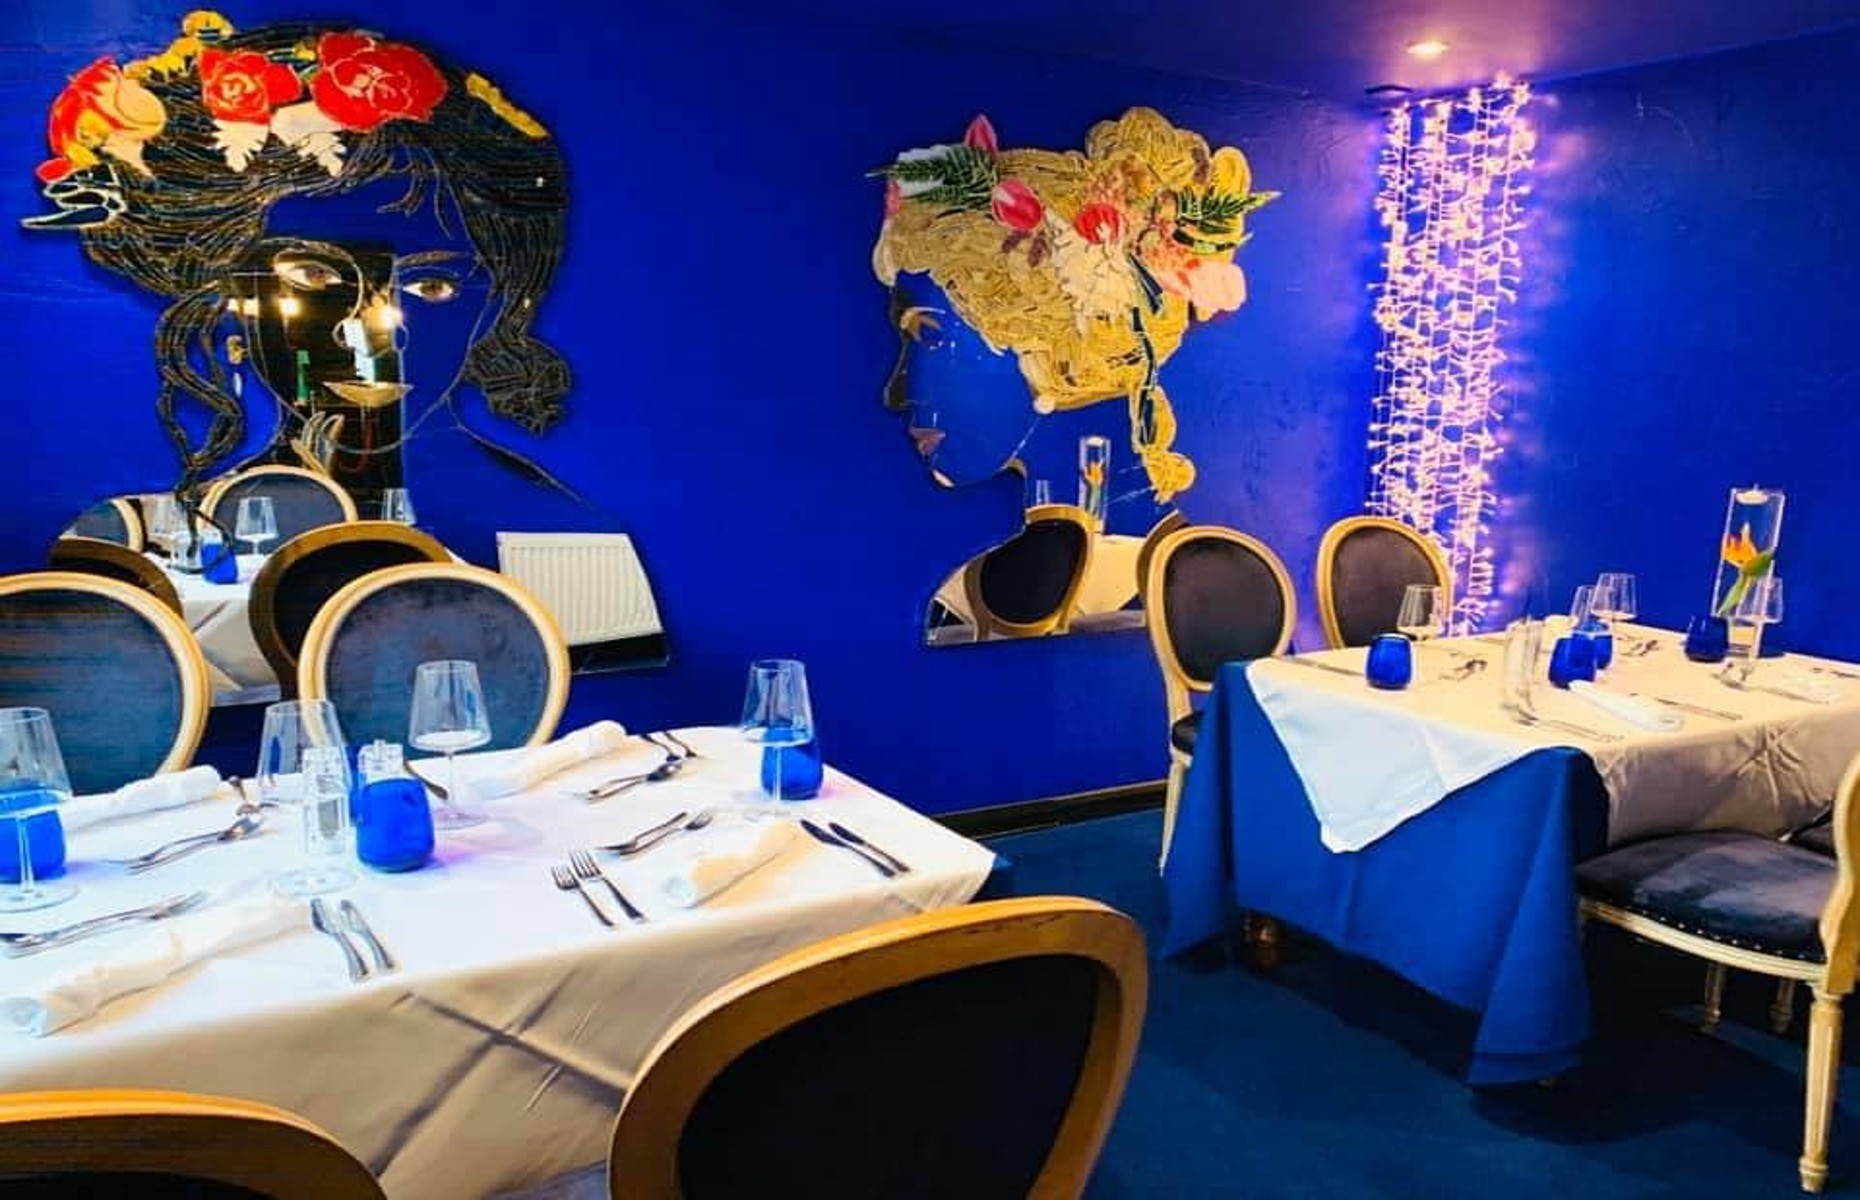 Lion Art Hotel blue room (Image: Lion Hotel, Berriew/Facebook)